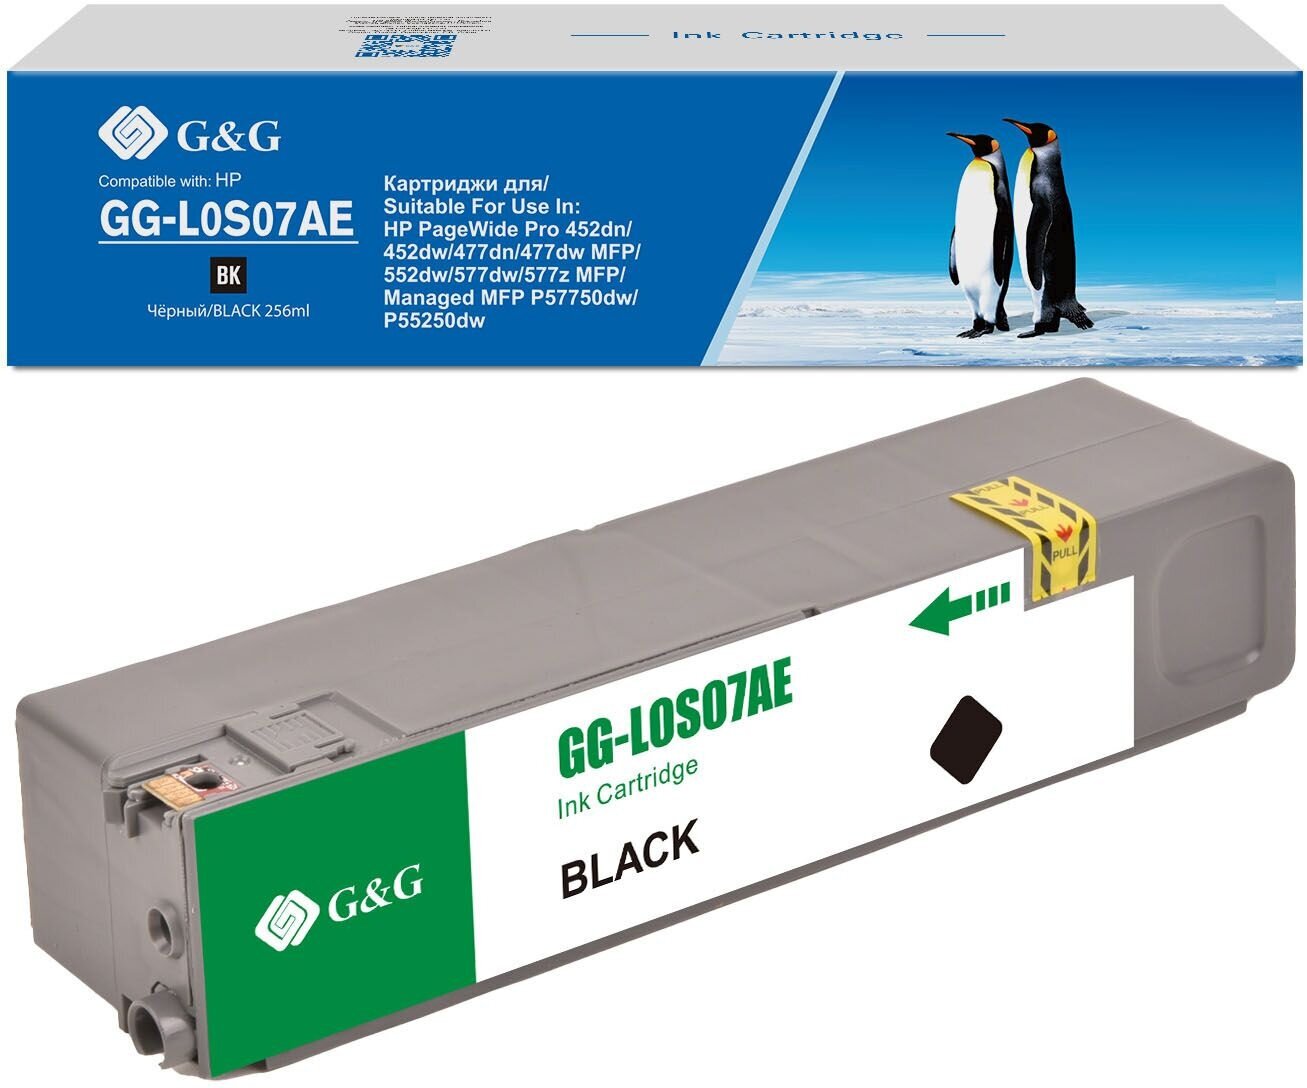 Картридж струйный G&G GG-L0S07AE черный (260мл) для HP PageWide Pro 452dn/452dw/477dn/477dw MFP